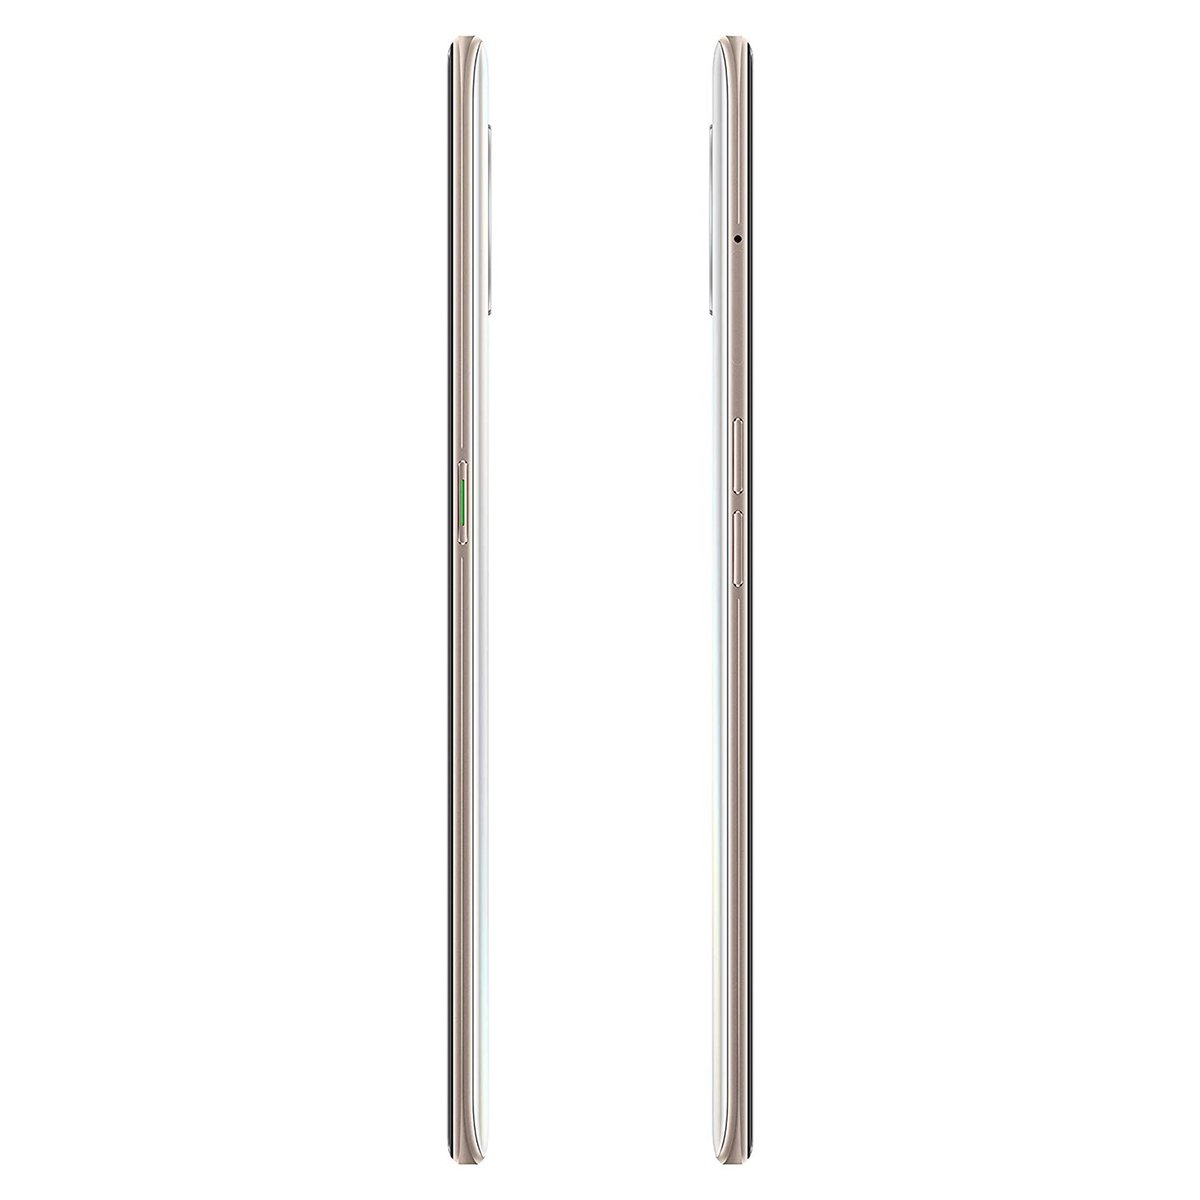 Oppo A5 (2020) 64GB Dazzling White